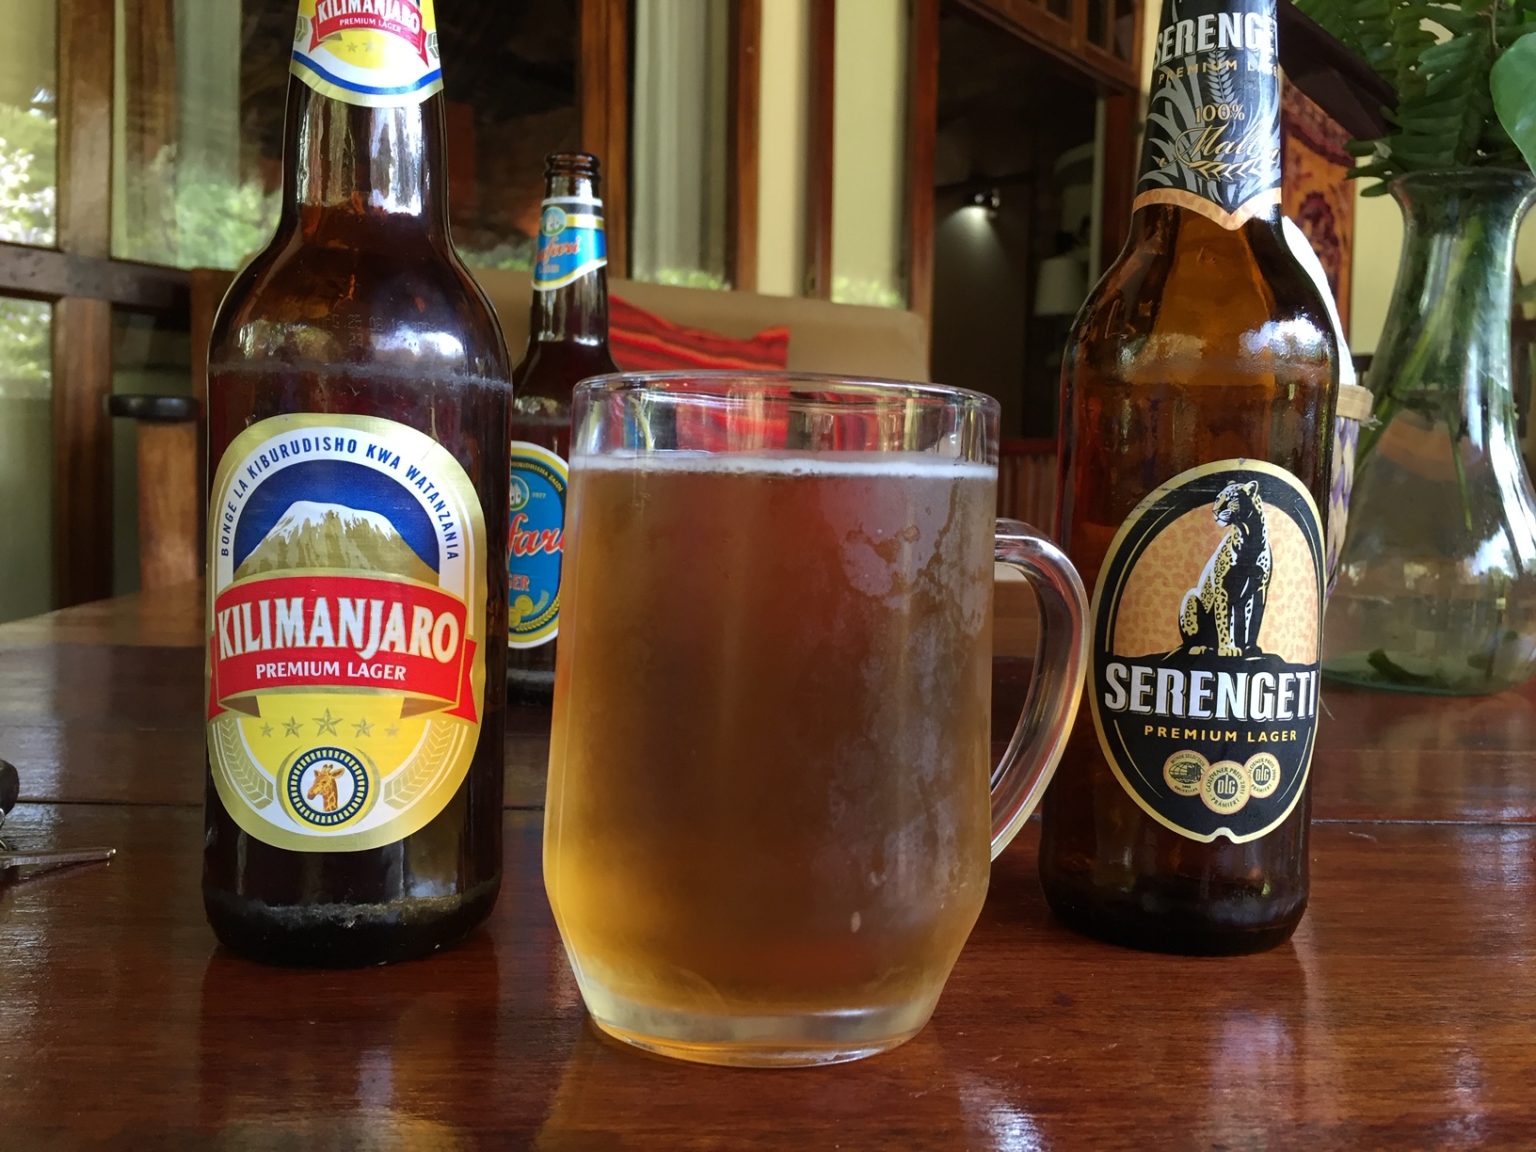 Kilimanjaro and Serengeti beers to celebrate.. um, yes!